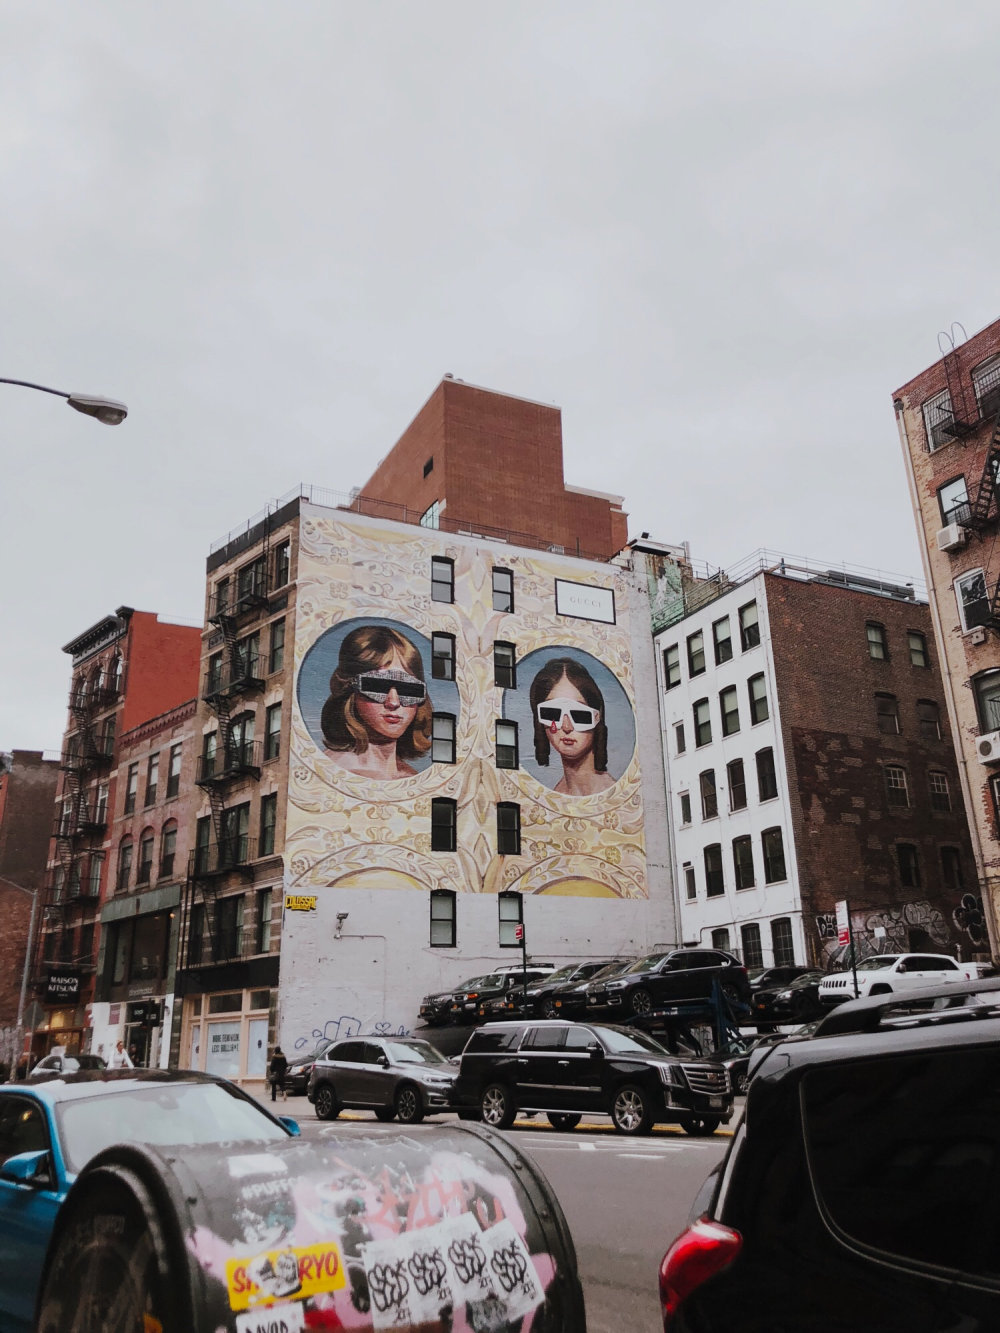 mural in New York by artist Ignasi Monreal.